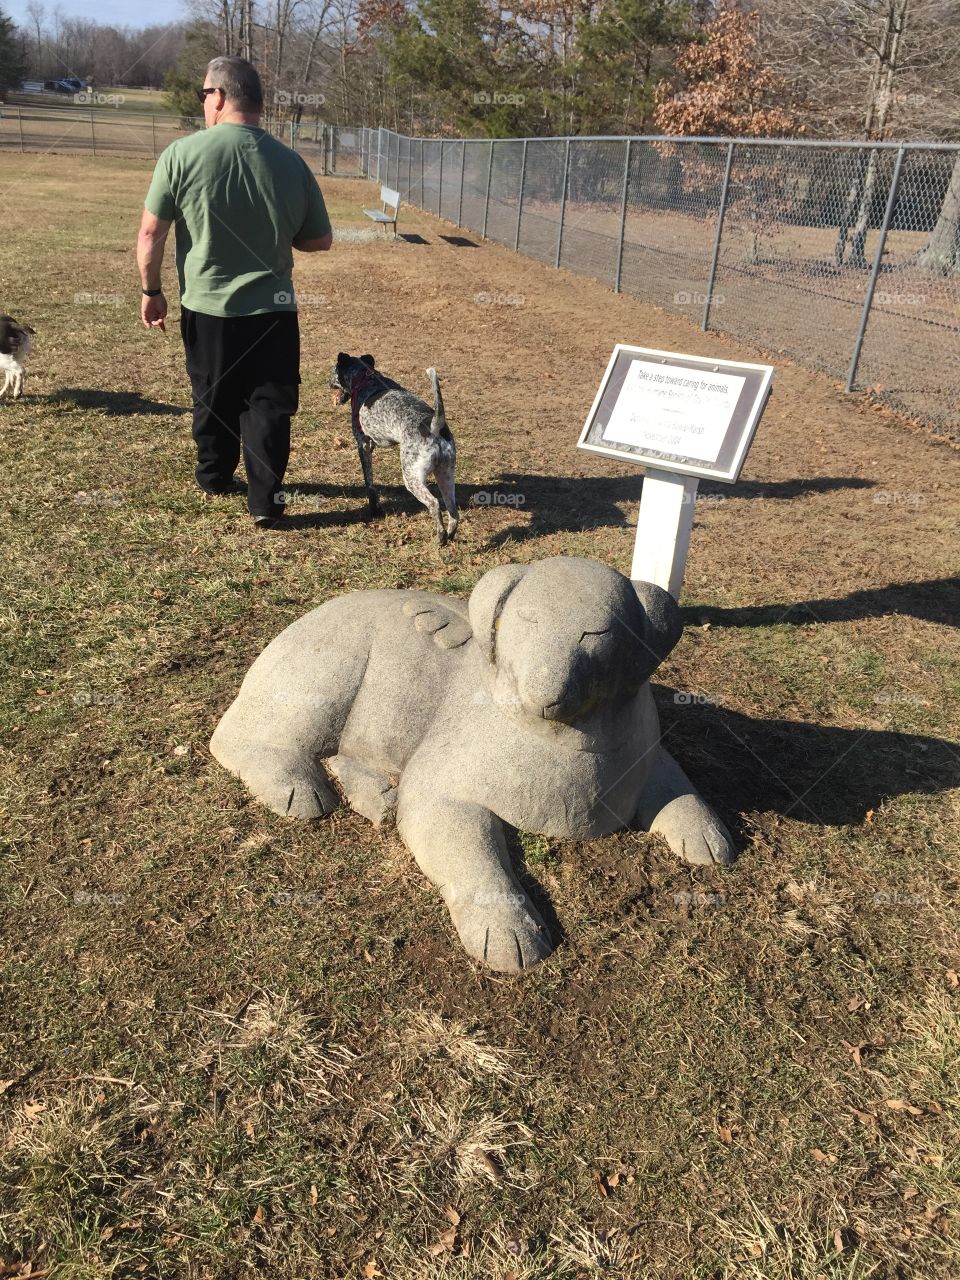 Stone dog statue at dog park